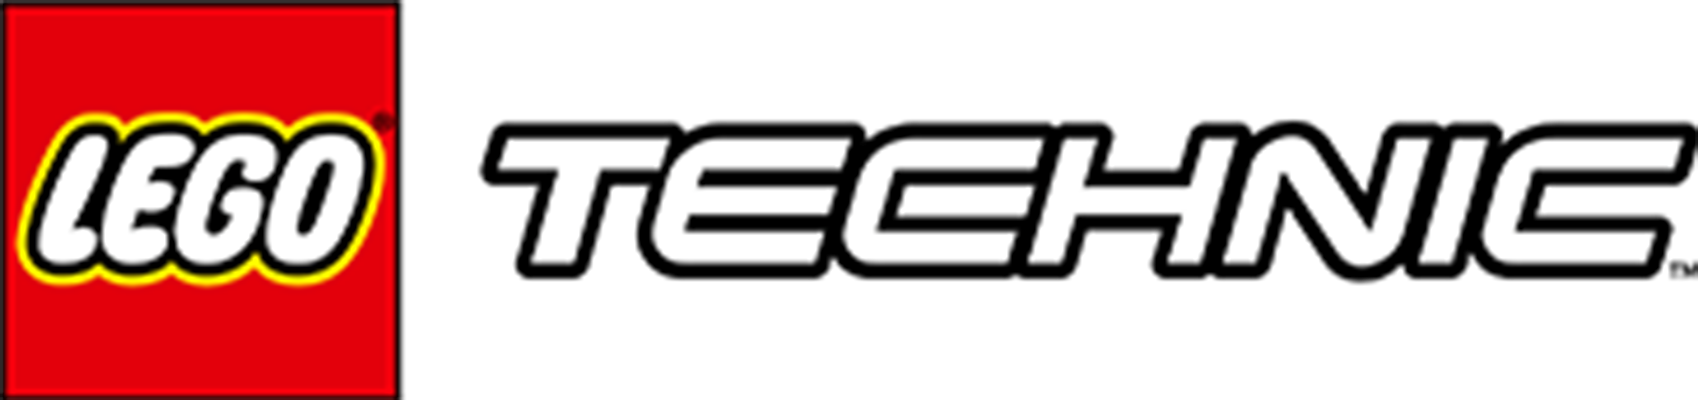 lego technic logo